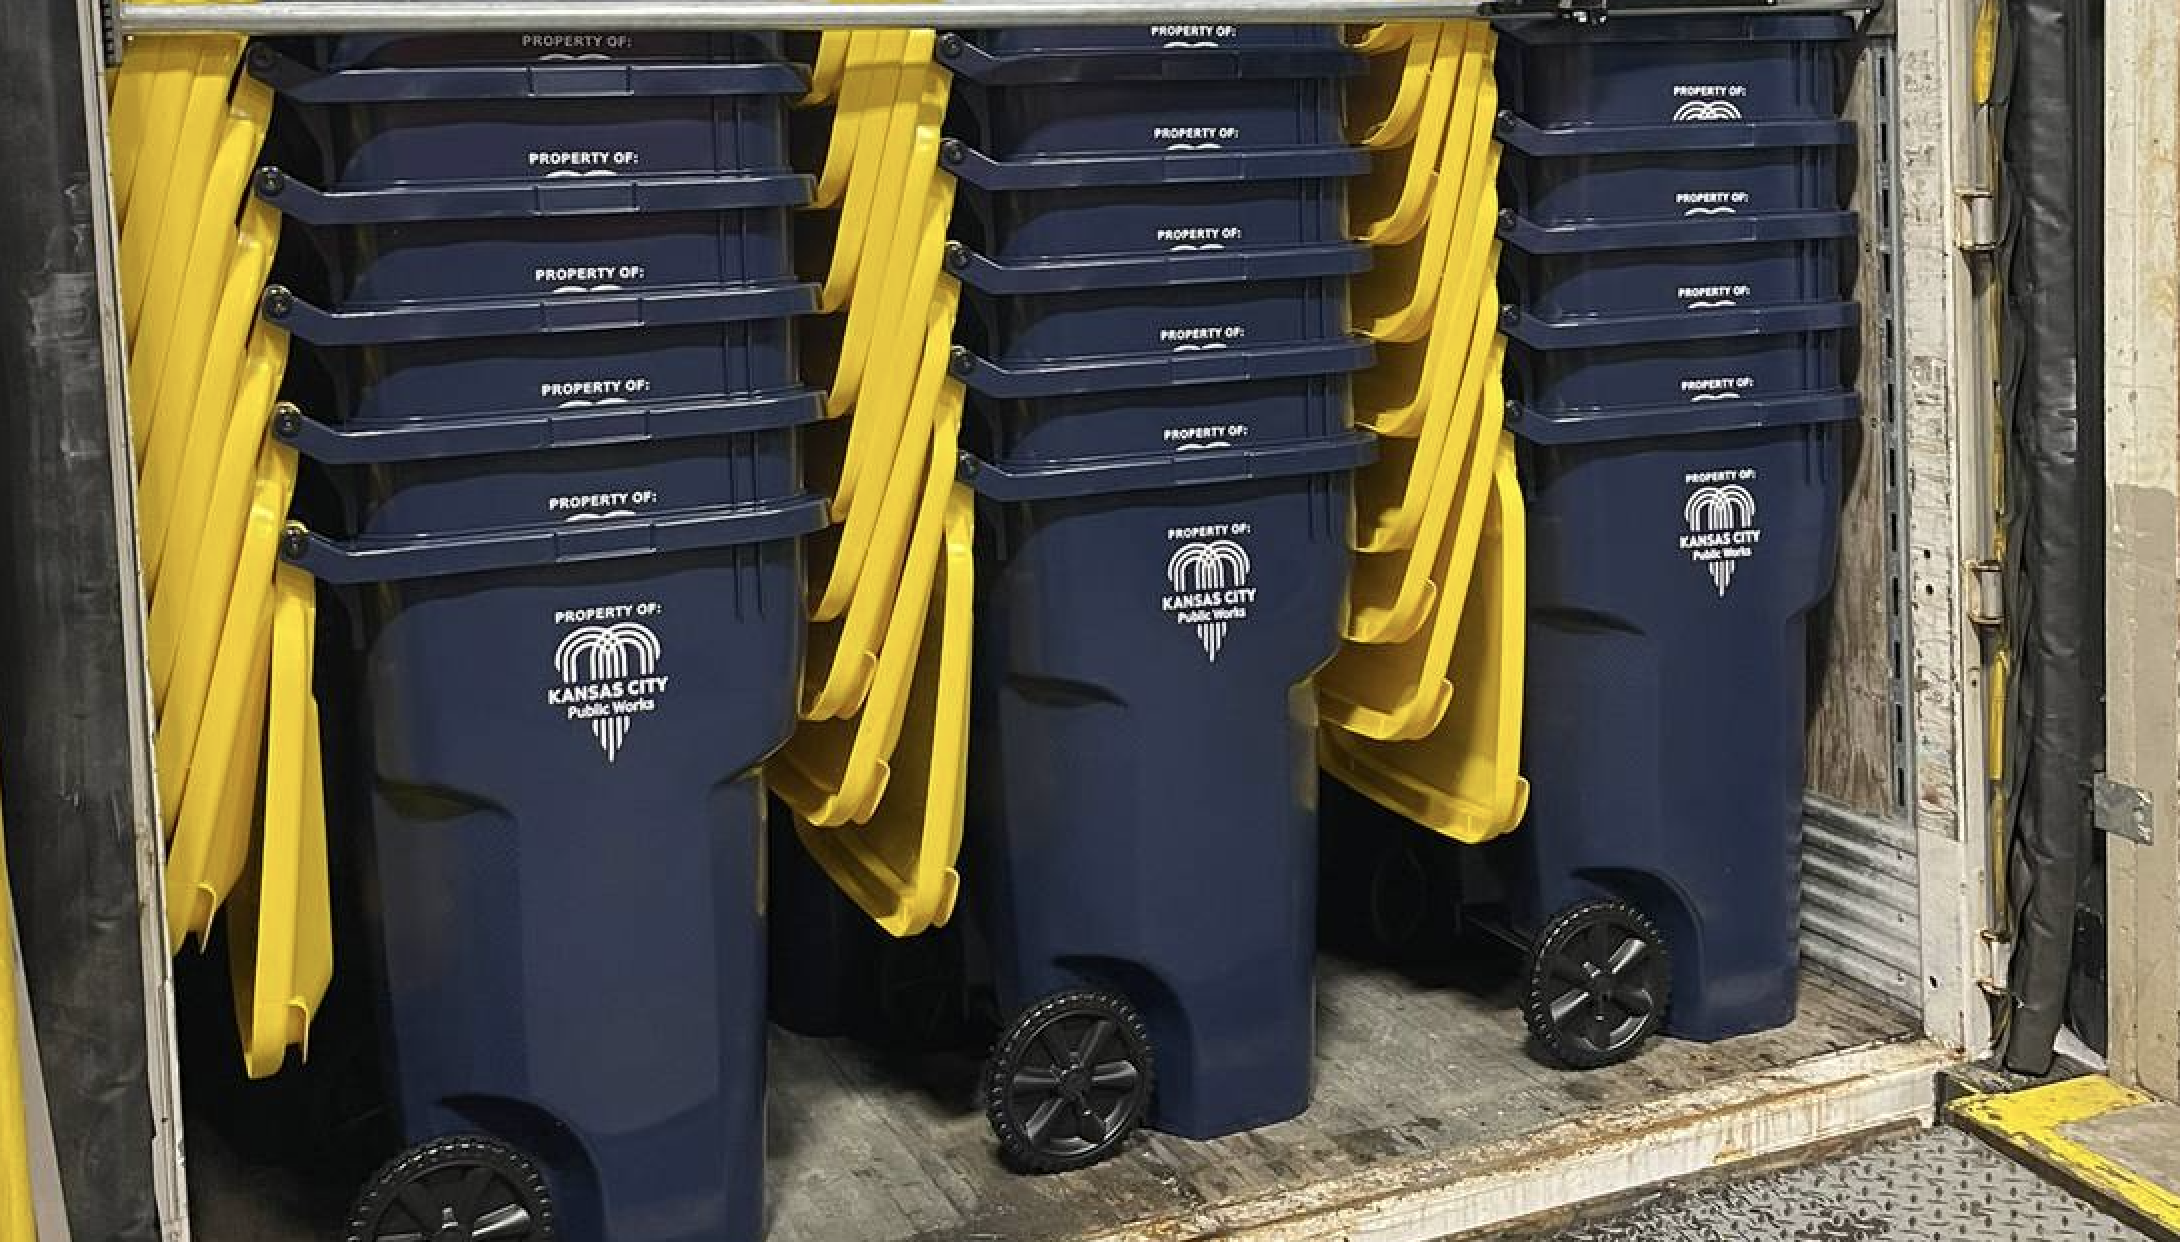 How do I get a new recycling bin/cart in Kansas City?